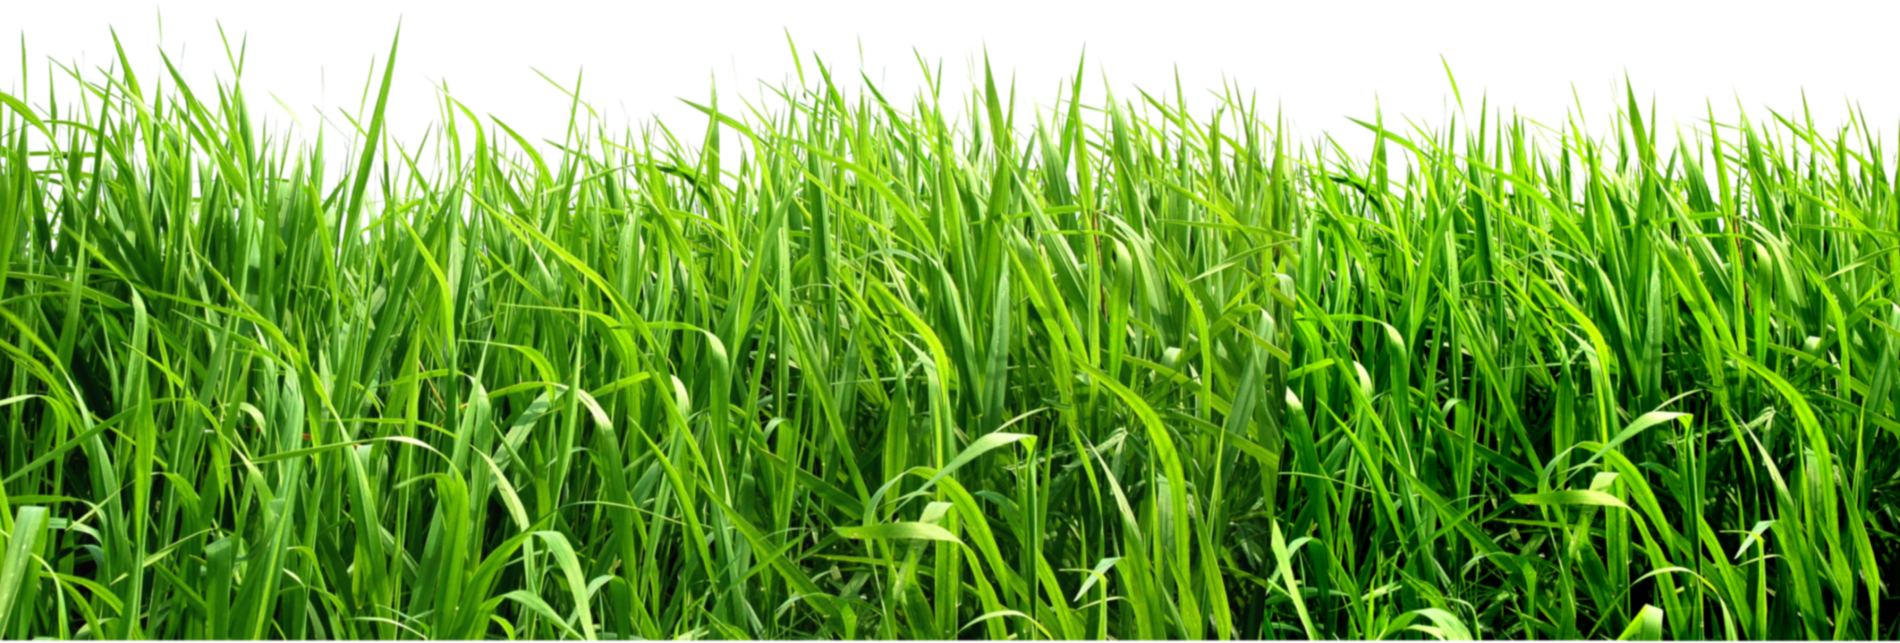 Poppy clipart grassy. Image result for grass